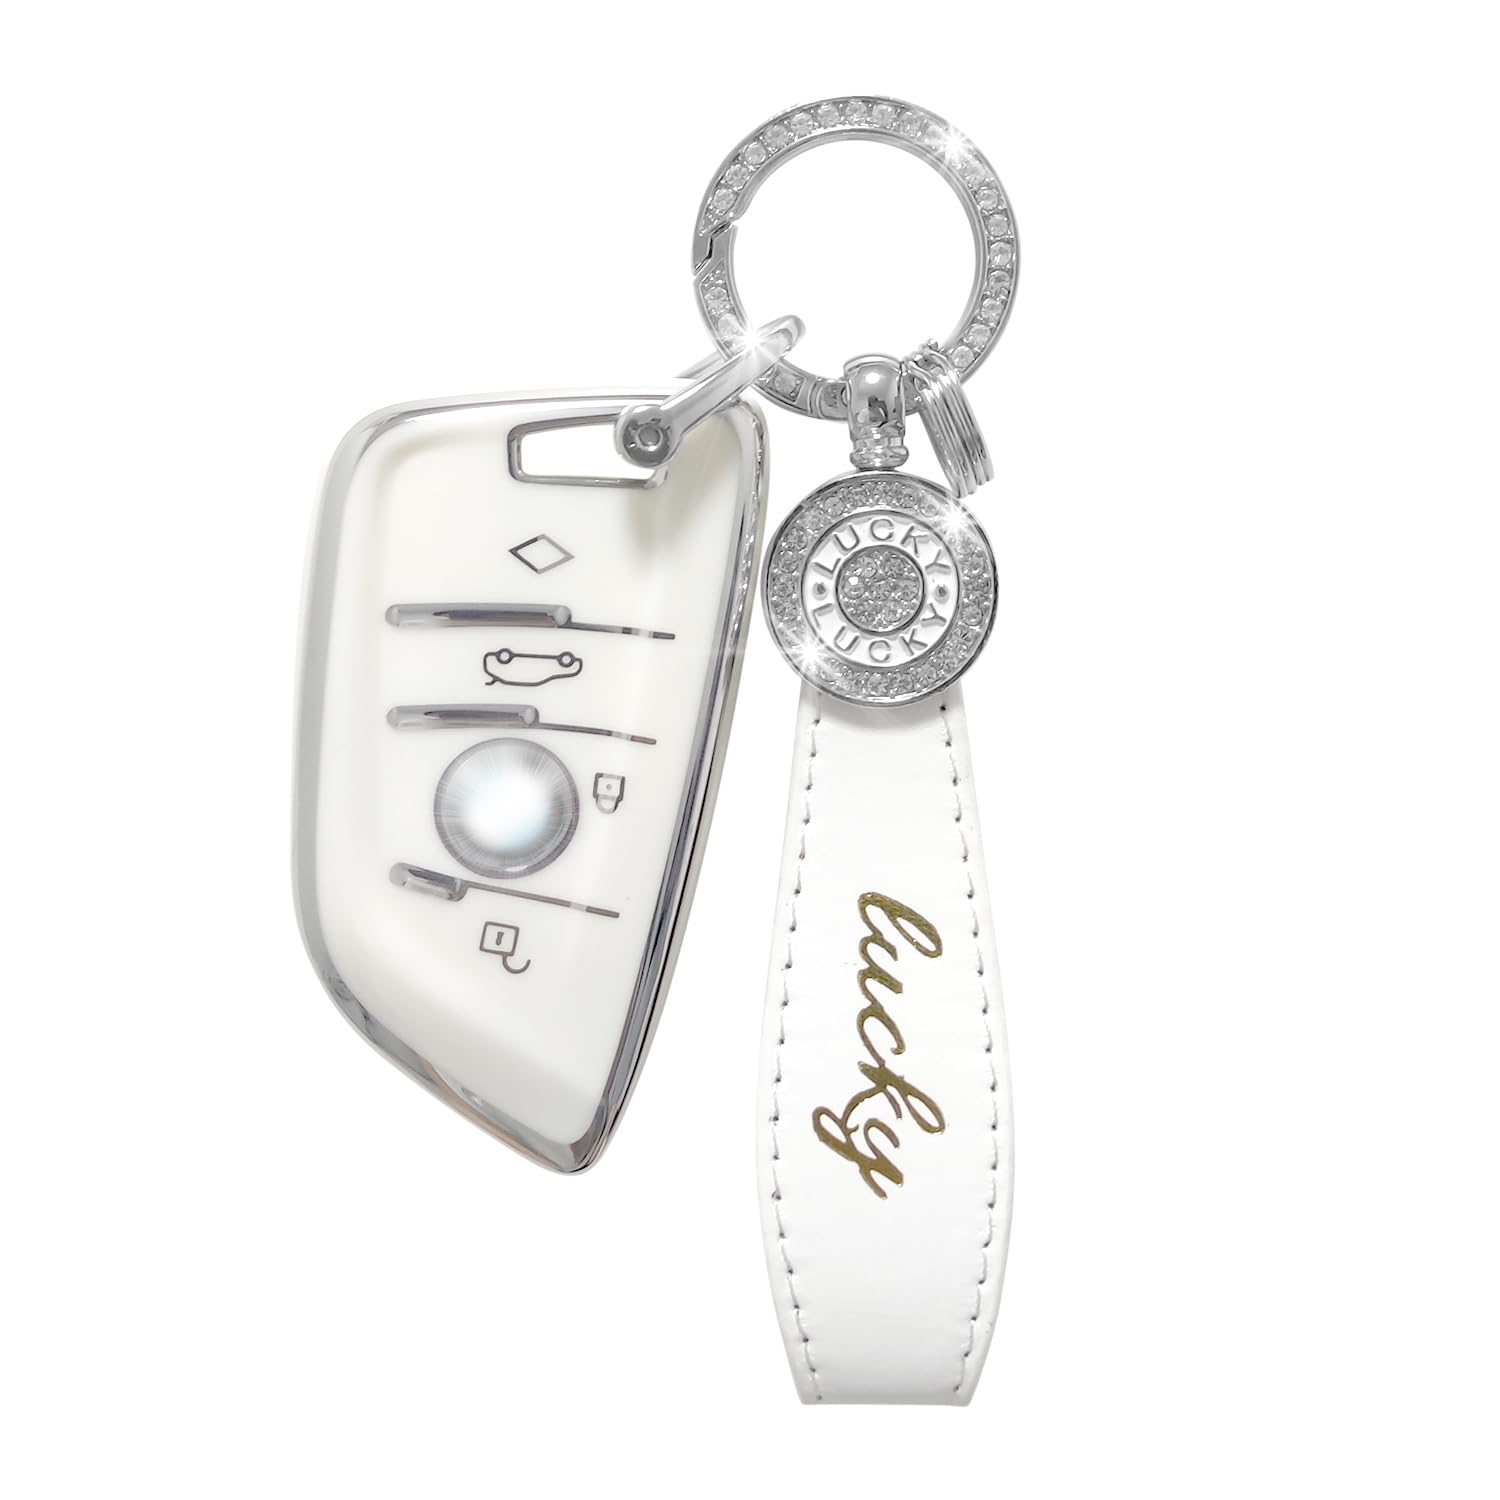 RCBDCYGJ Autoschlüssel Hülle Cover Passt für BMW X1, X2, X3, X5, X6, 2, 5, 6, 7, Serie 3, 4 Tasten Schlüsseletui TPU Schlüsselhülle mit Lederanhänger Schlüsselanhänger von RCBDCYGJ